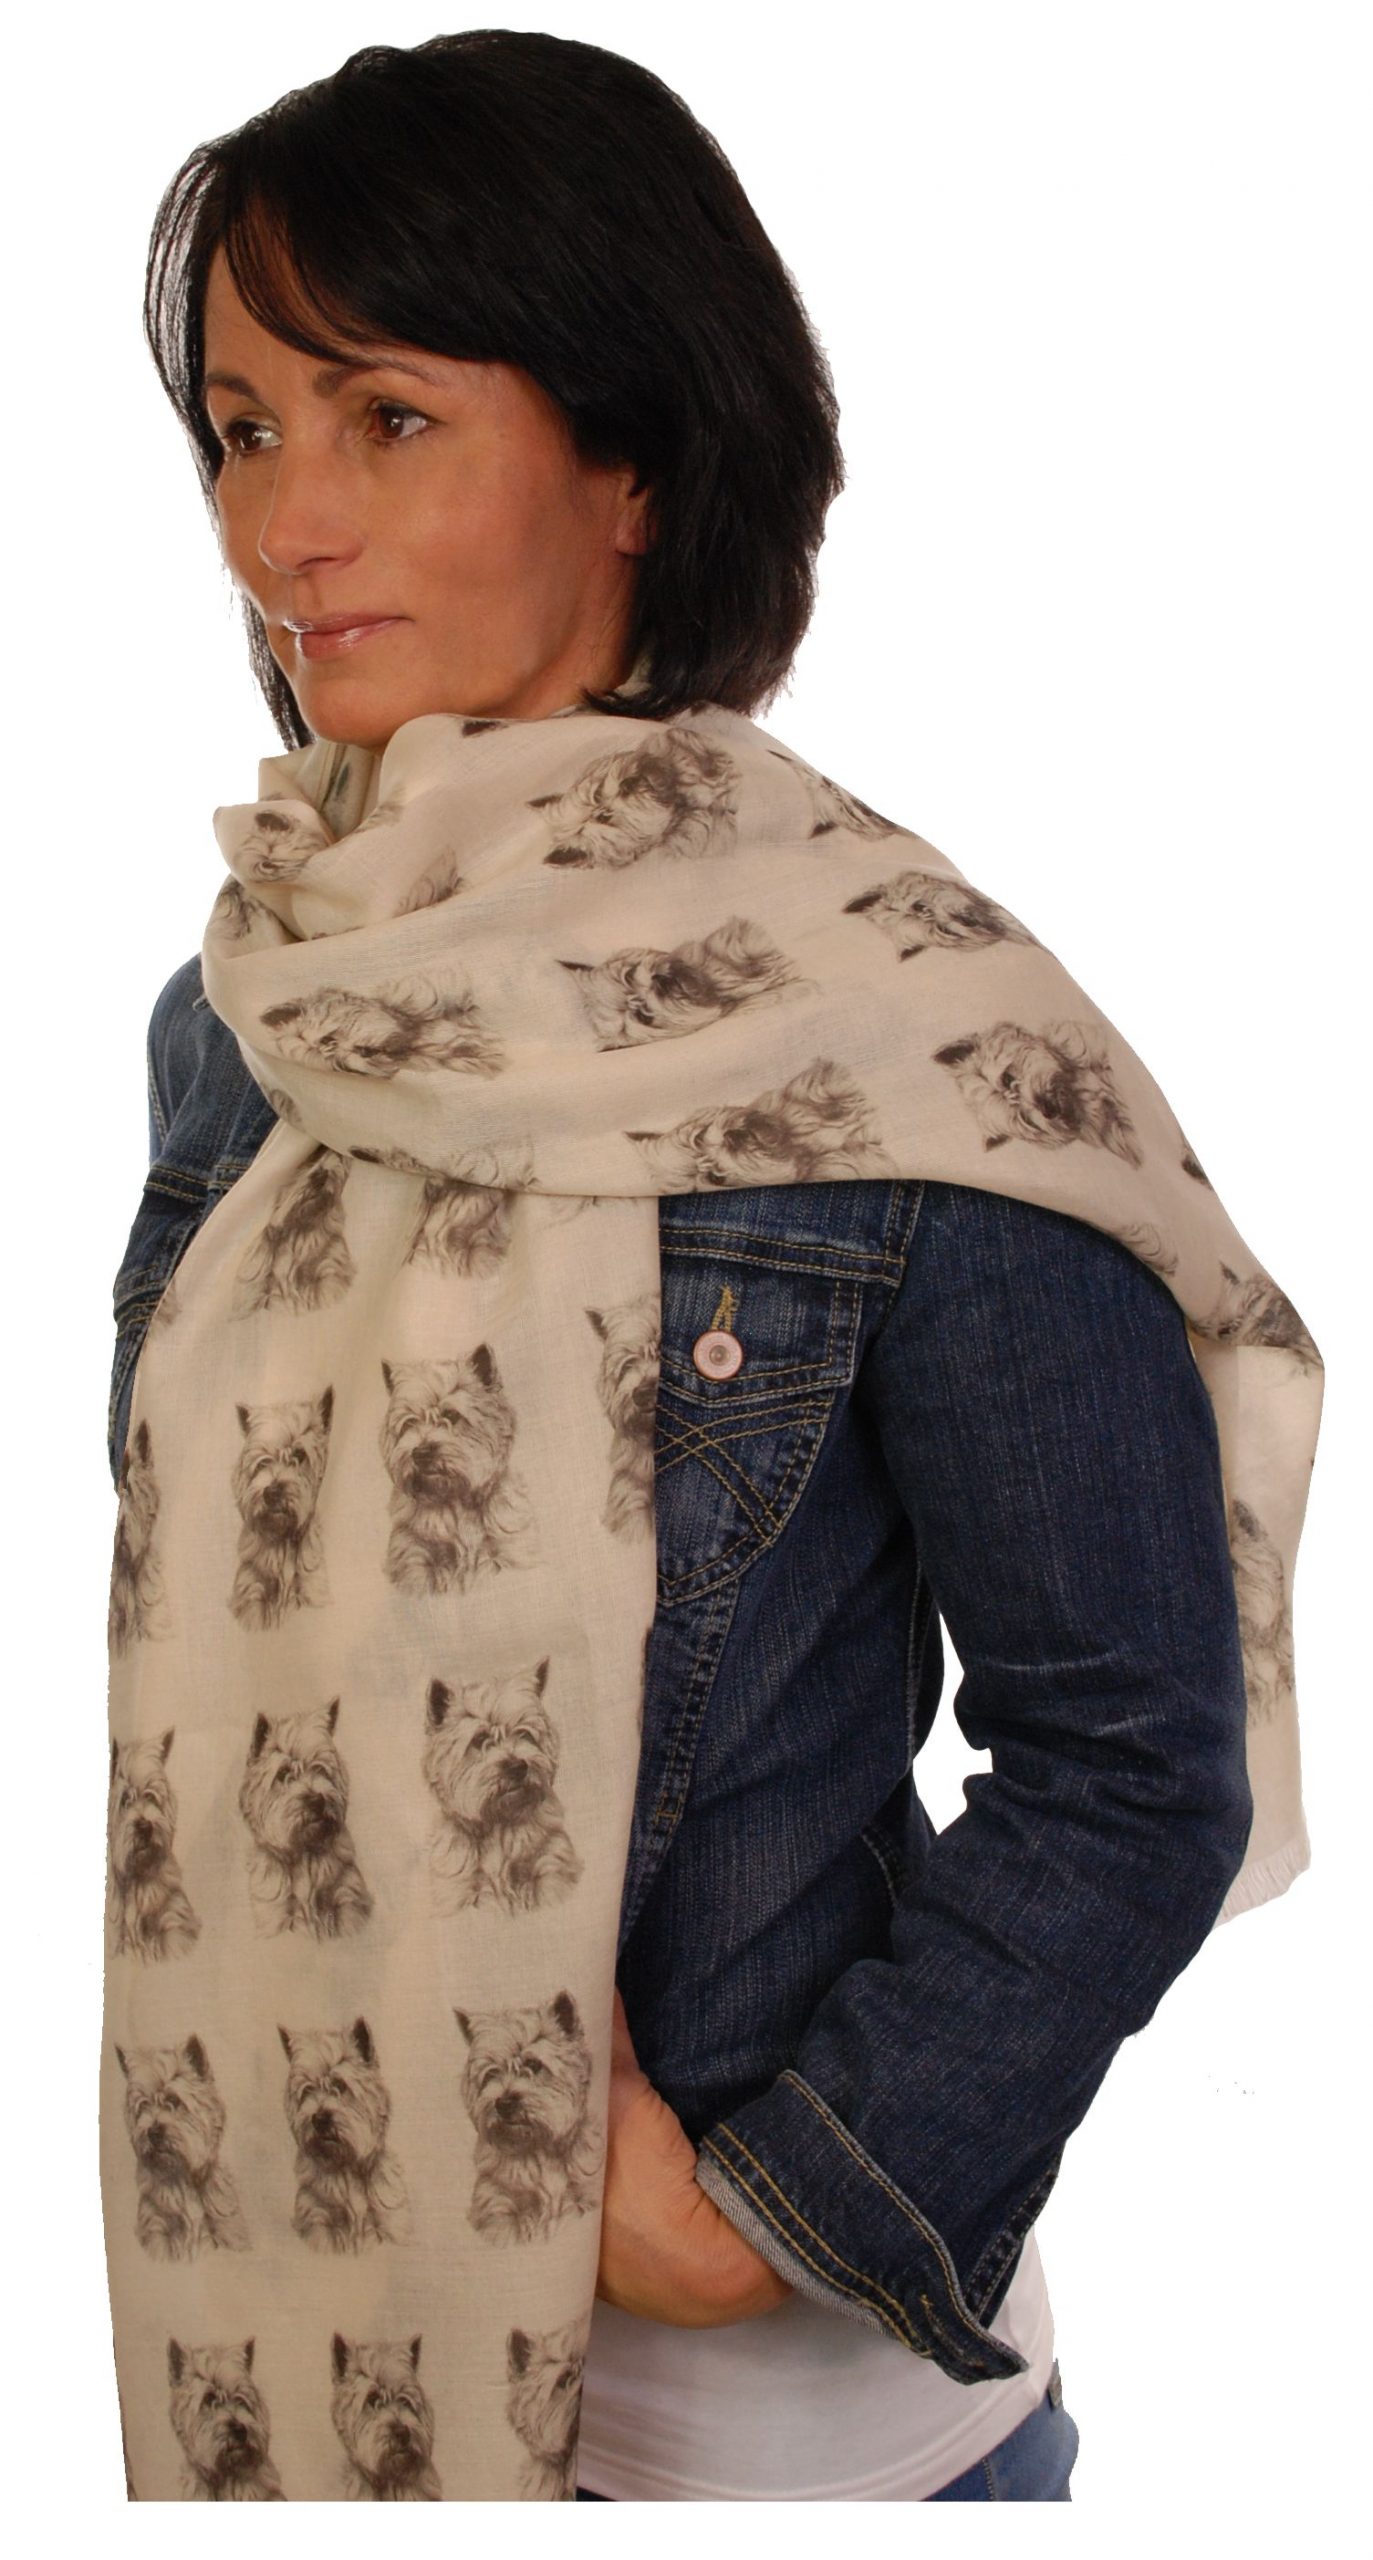 Mike Sibley Westie West Highland Terrier licensed design ladies fashion scarf